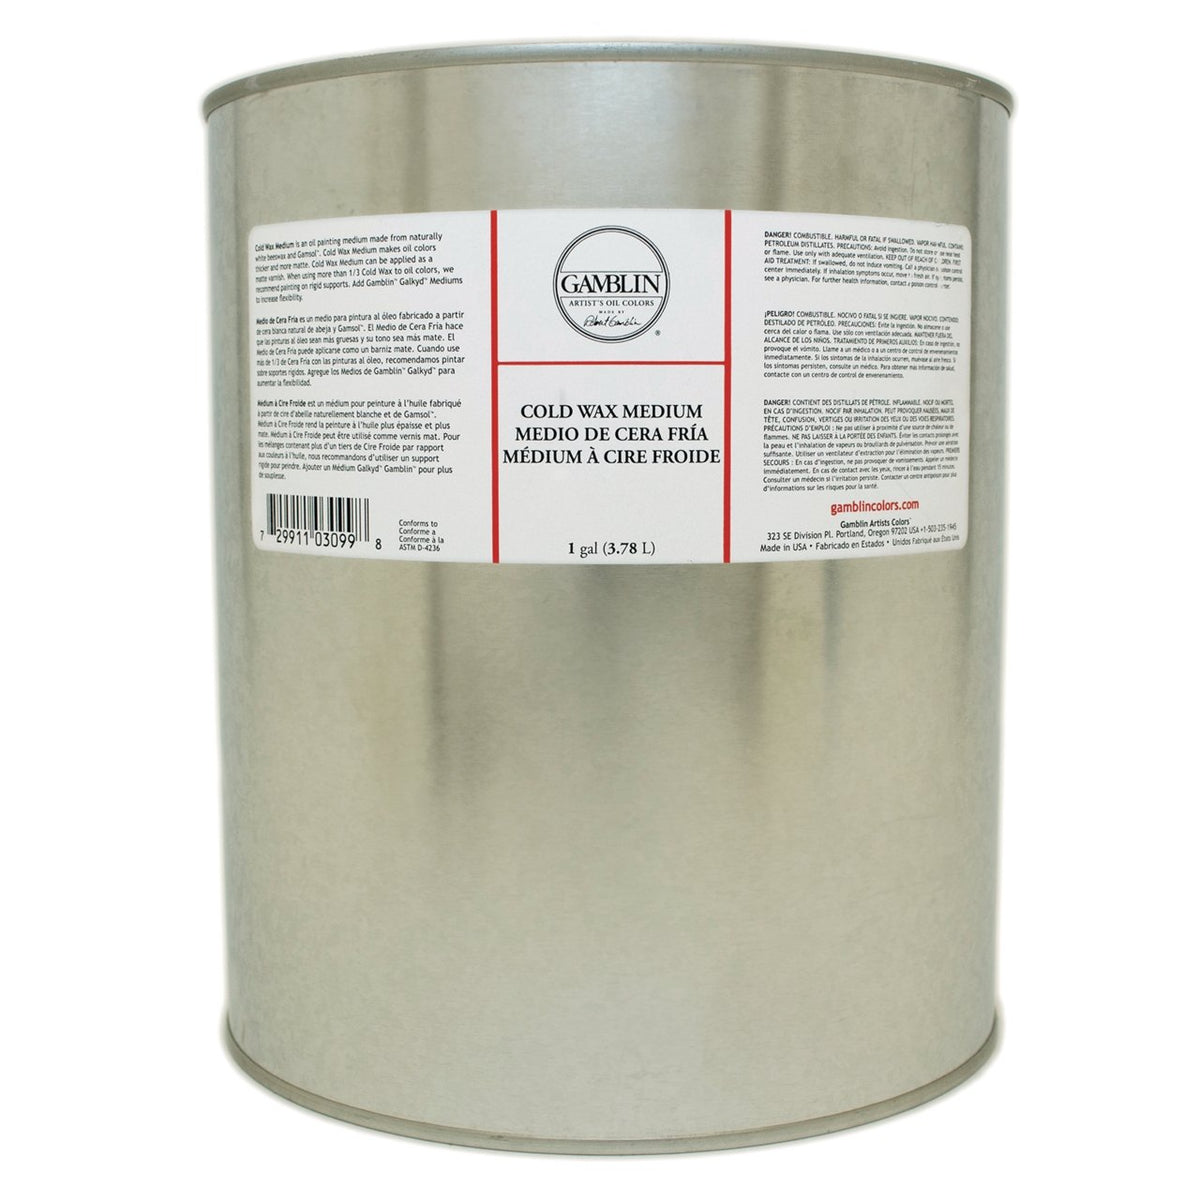 Dorlands : Wax Medium : 3780ml (1 Gallon) - Cold Wax - Encaustic